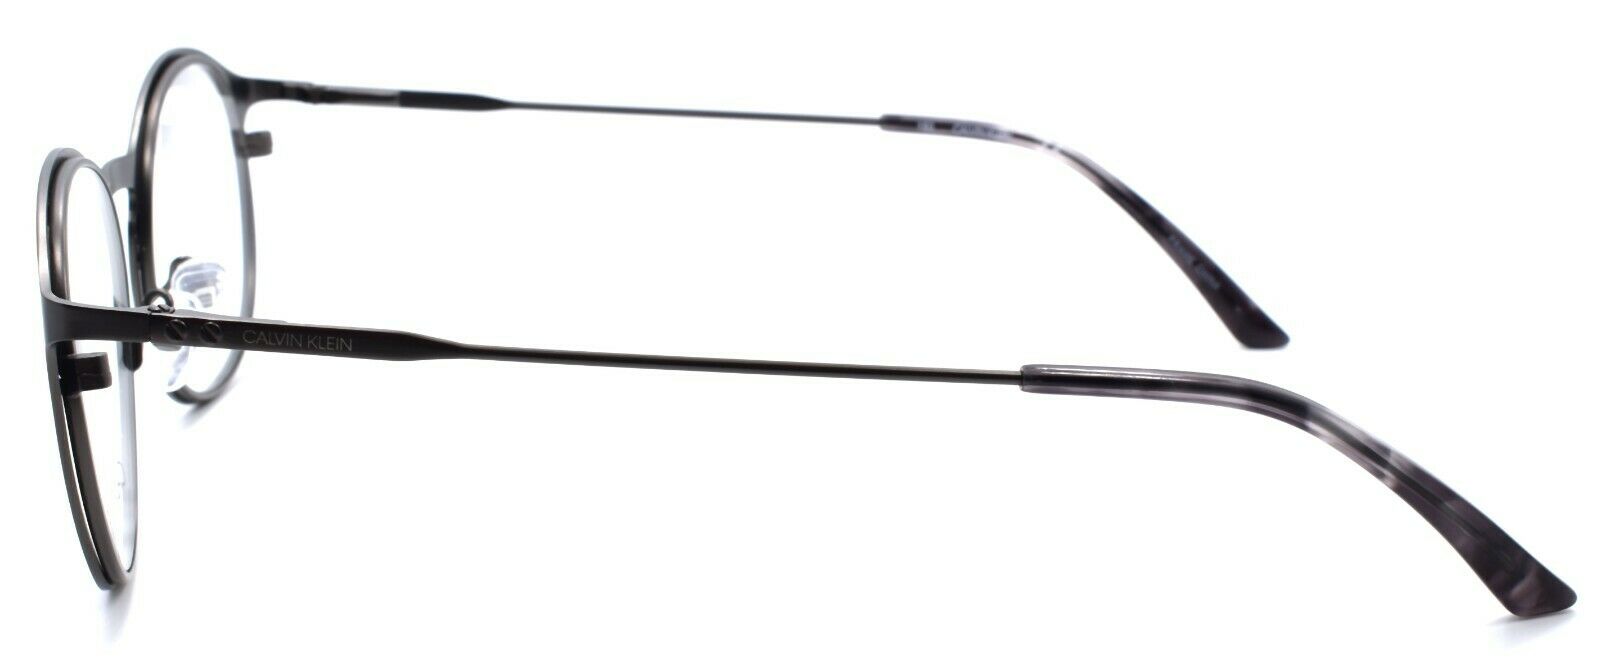 3-Calvin Klein C20112 008 Men's Eyeglasses Frames 47-20-150 Matte Gunmetal-883901127720-IKSpecs